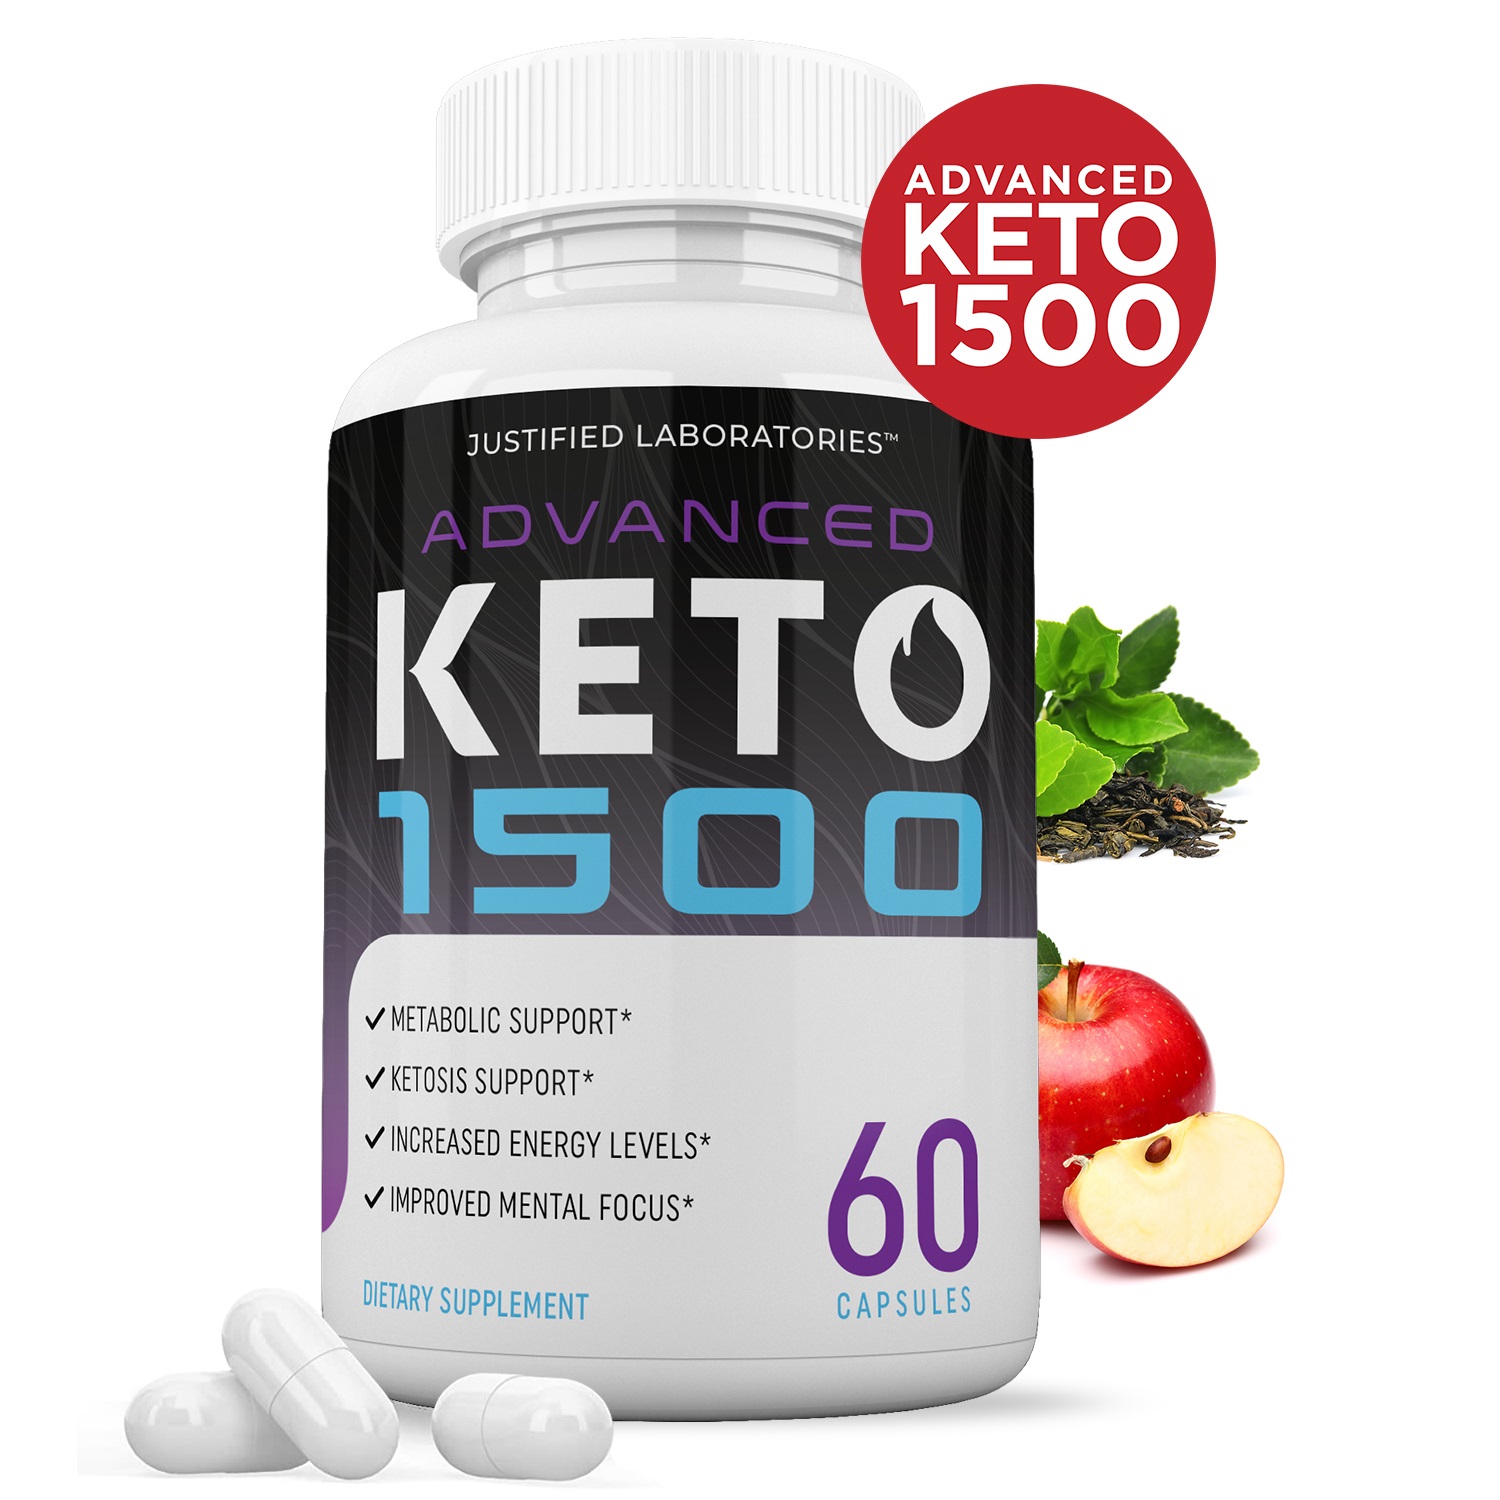 Advanced Keto 1500 Pills Includes Apple Cider Vinegar goBHB Exogenous Ketones Advanced Ketogenic Supplement Ketosis Support for Men Women 60 Capsule - image 1 of 5